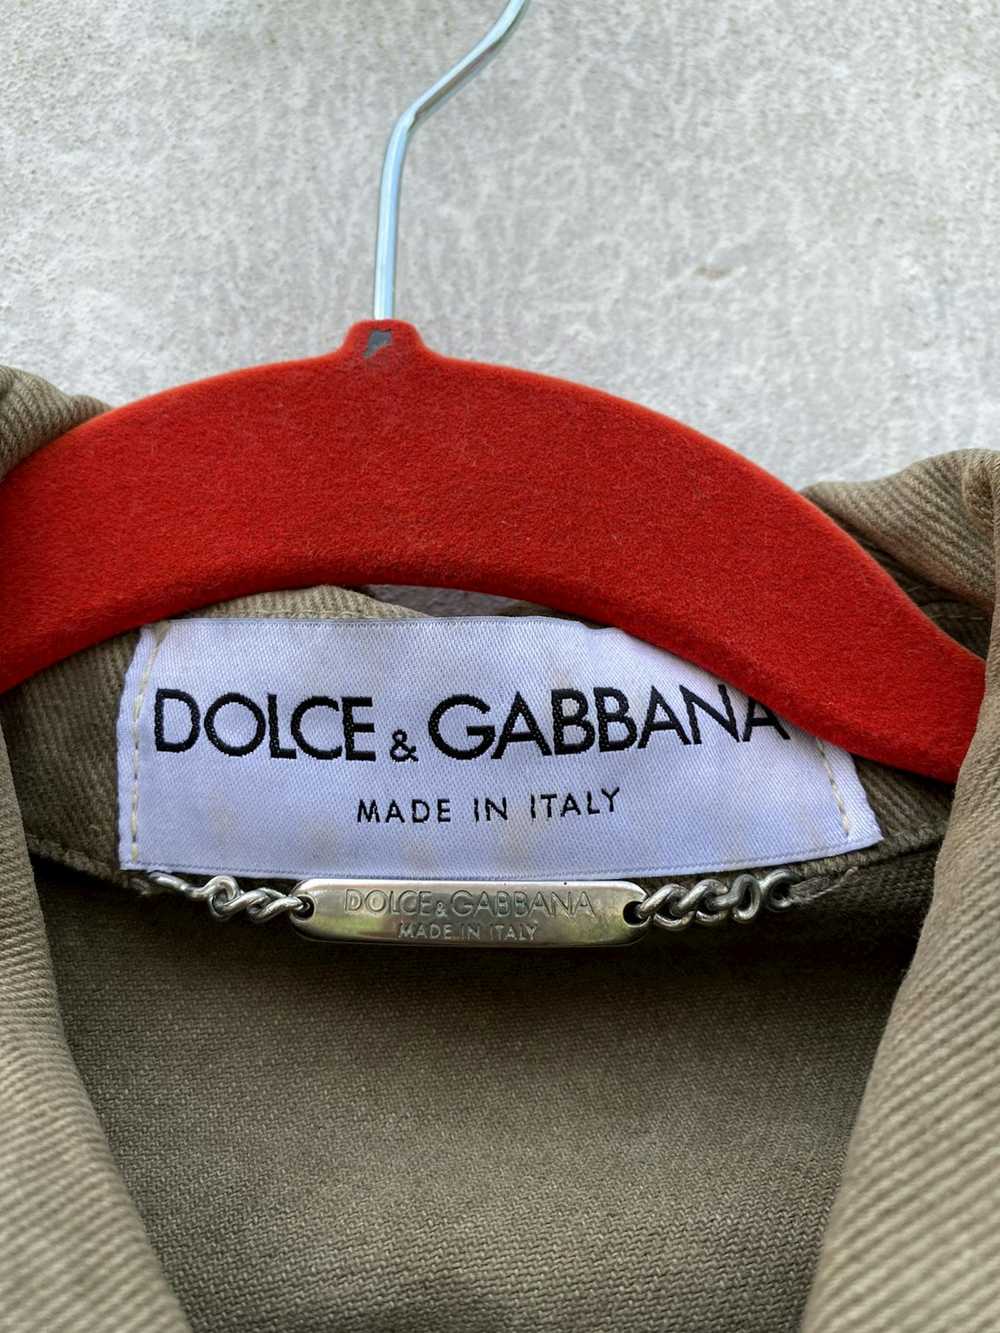 Dolce & Gabbana Denim Jacket By Dolce & Gabbana - image 6